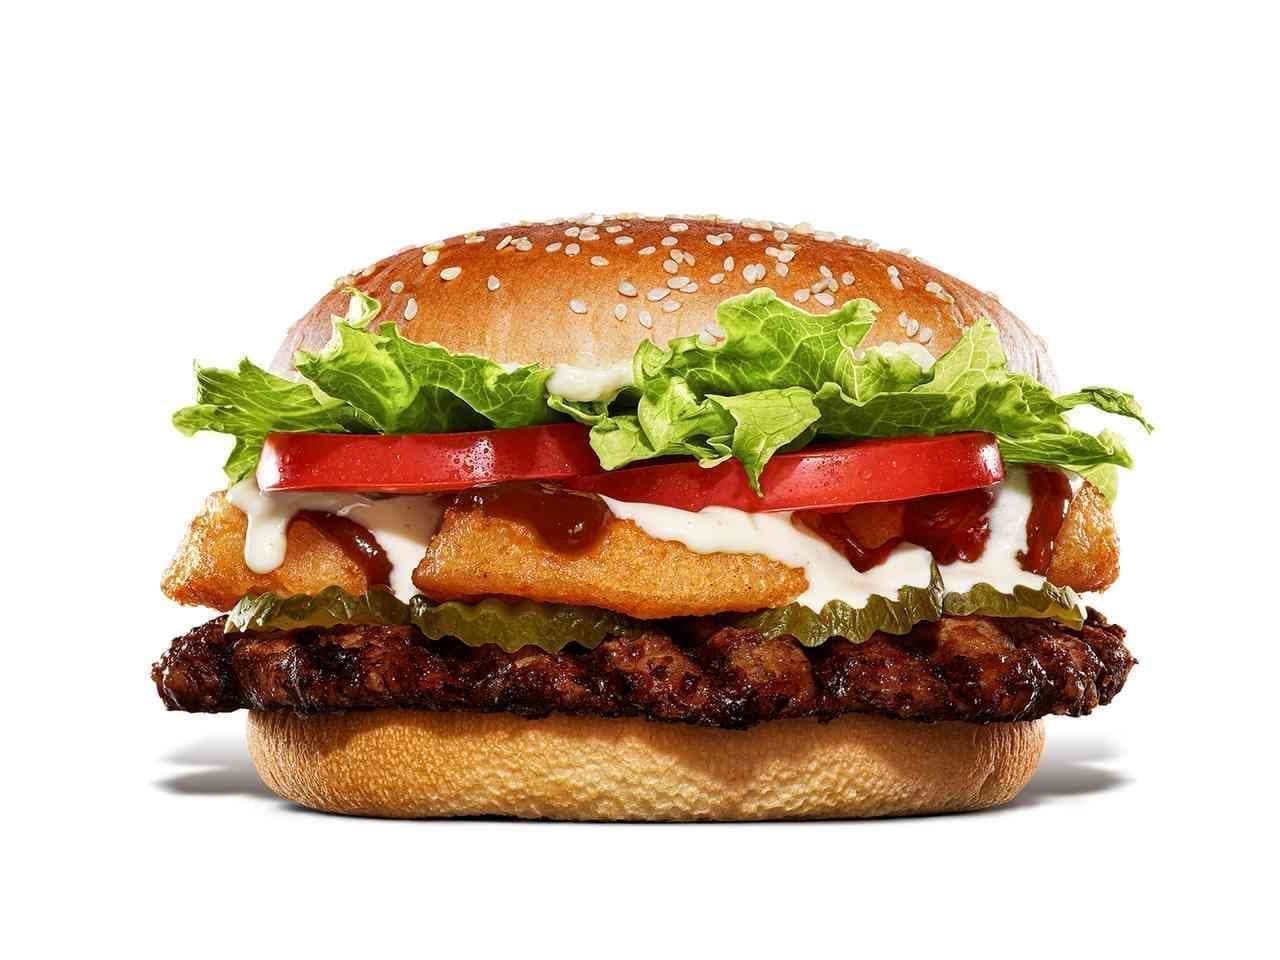 Burger King "Western Smoky Whopper"